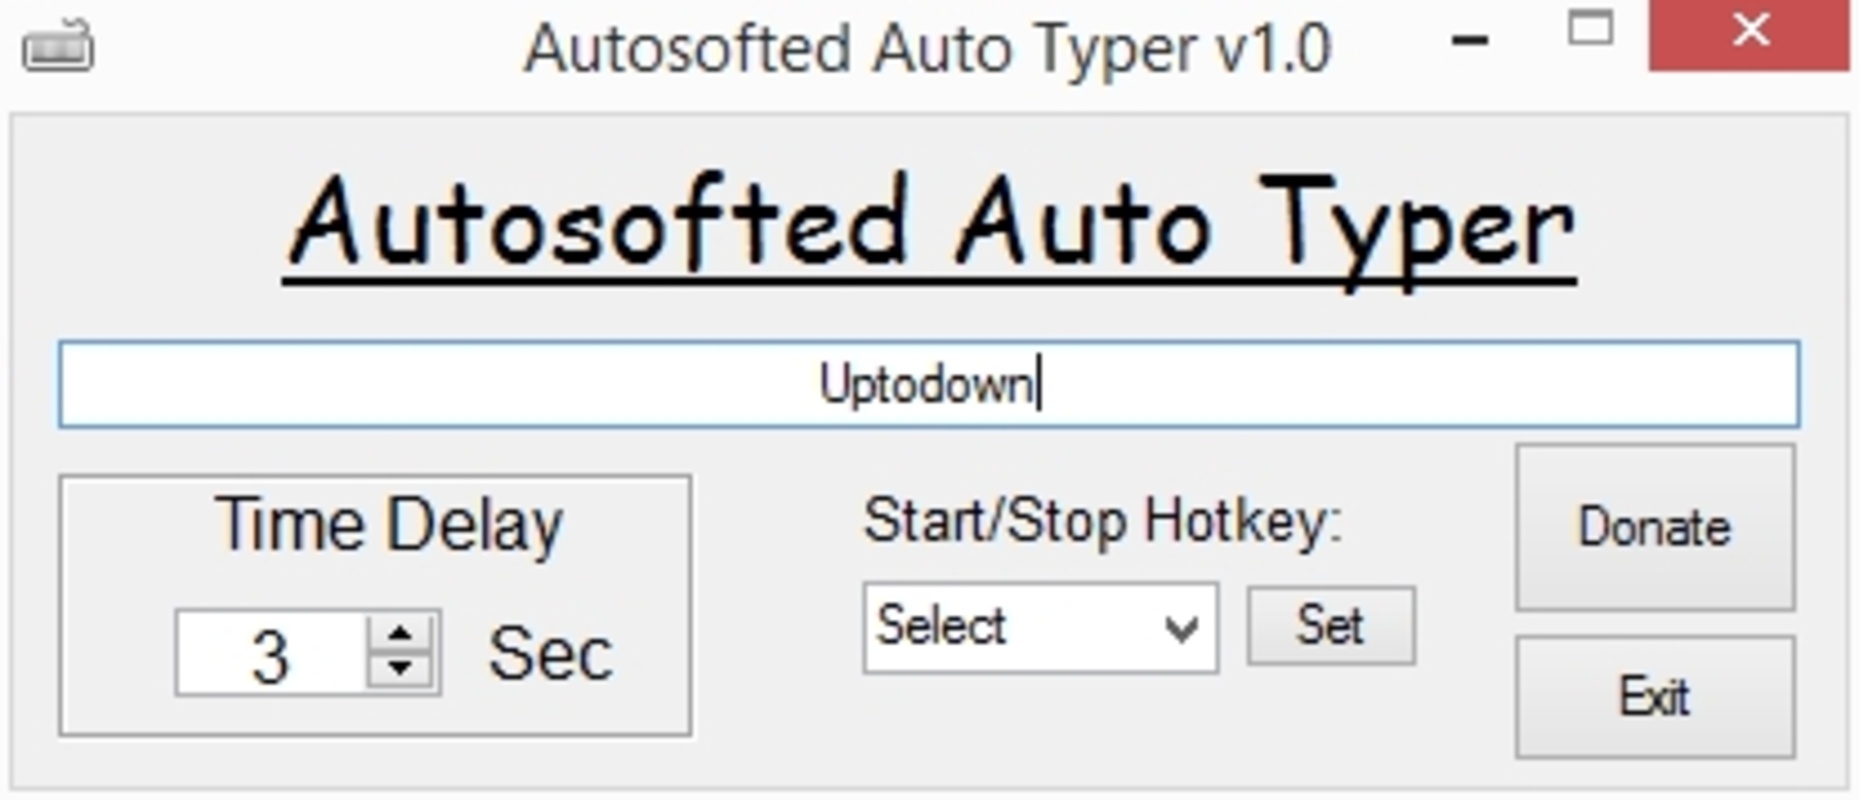 Auto Typer 34.1.1 for Windows Screenshot 2